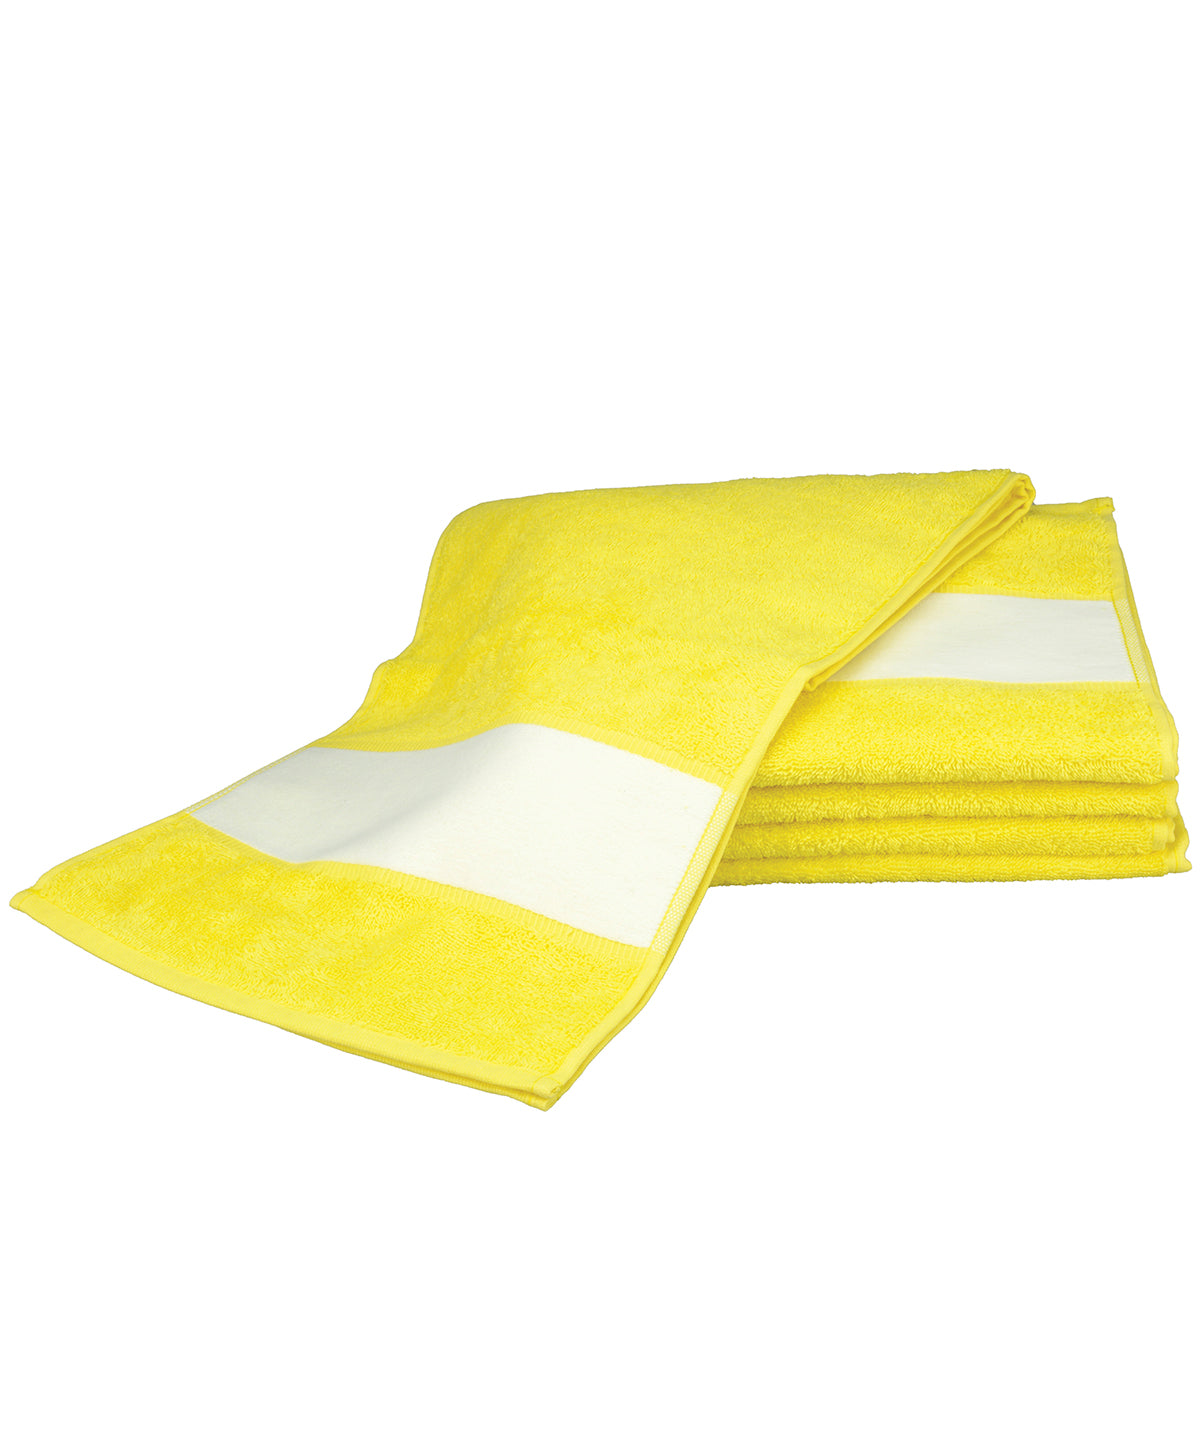 Personalised Towels - Light Yellow A&R Towels ARTG® SUBLI-Me® sport towel